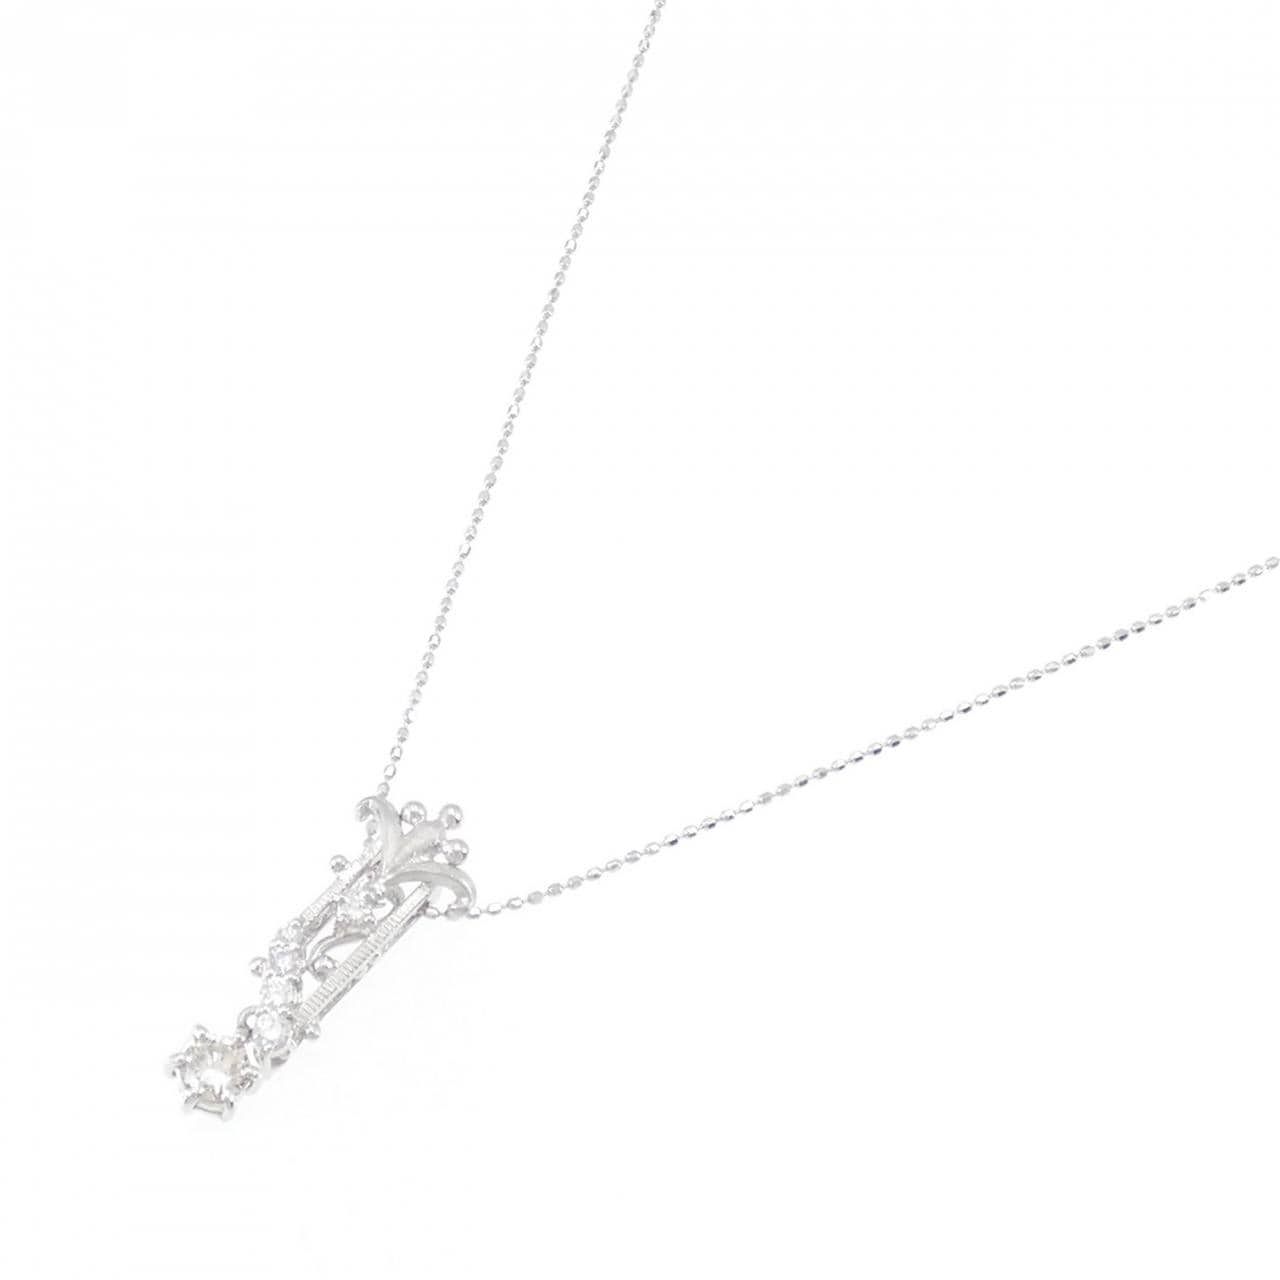 K18WG/750WG Diamond Necklace 0.38CT